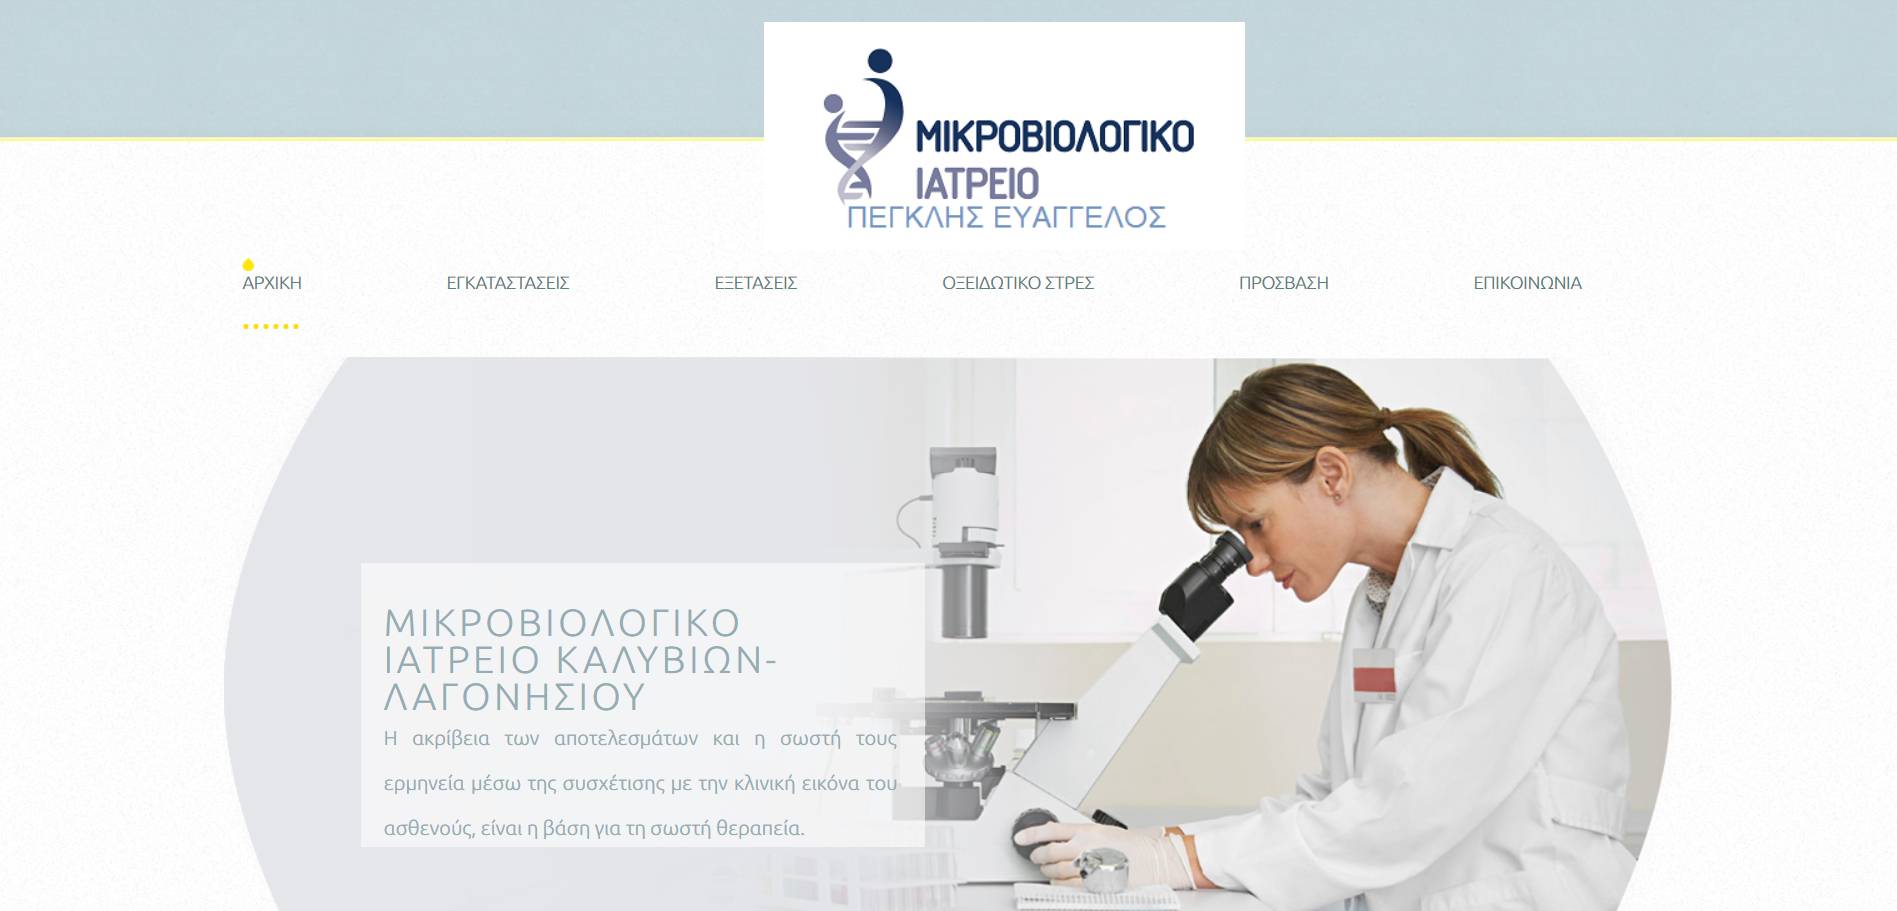 Clinical laboratory Pegklis Evangelos